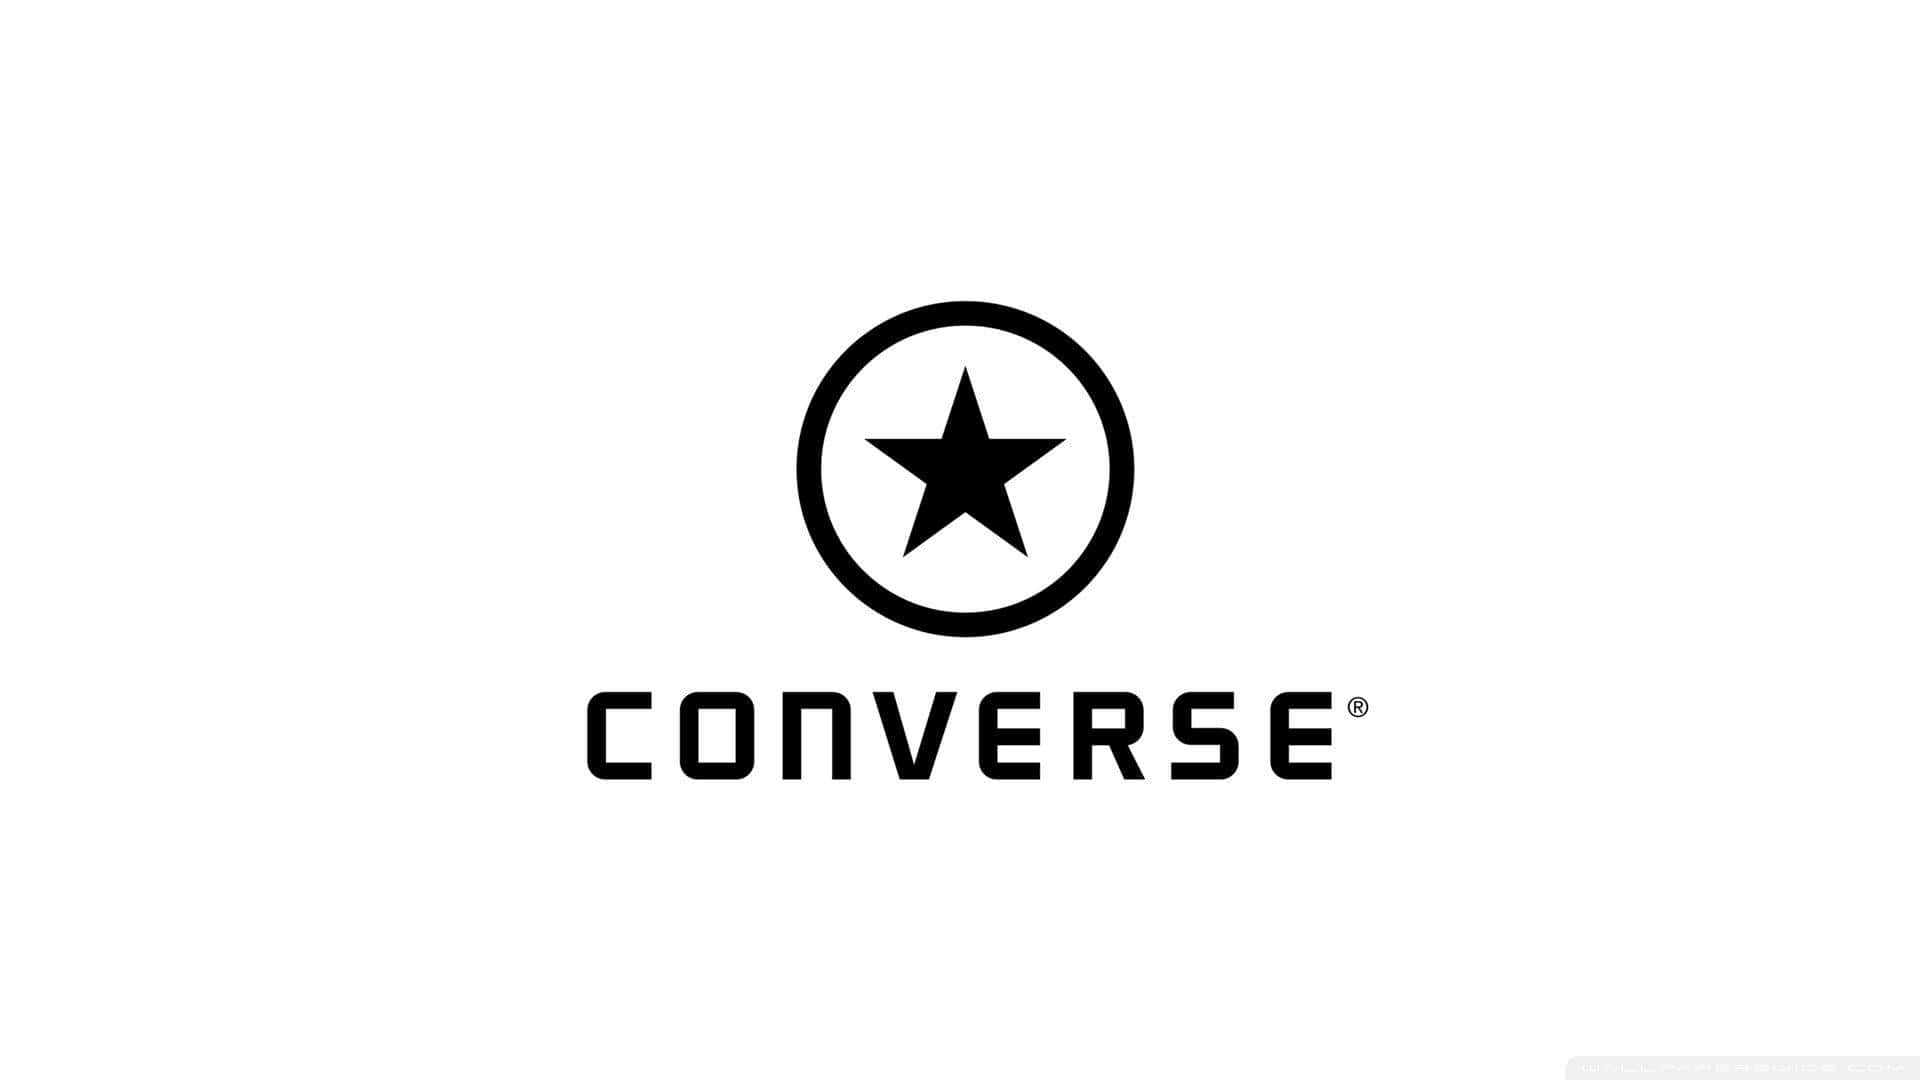 Converse Background